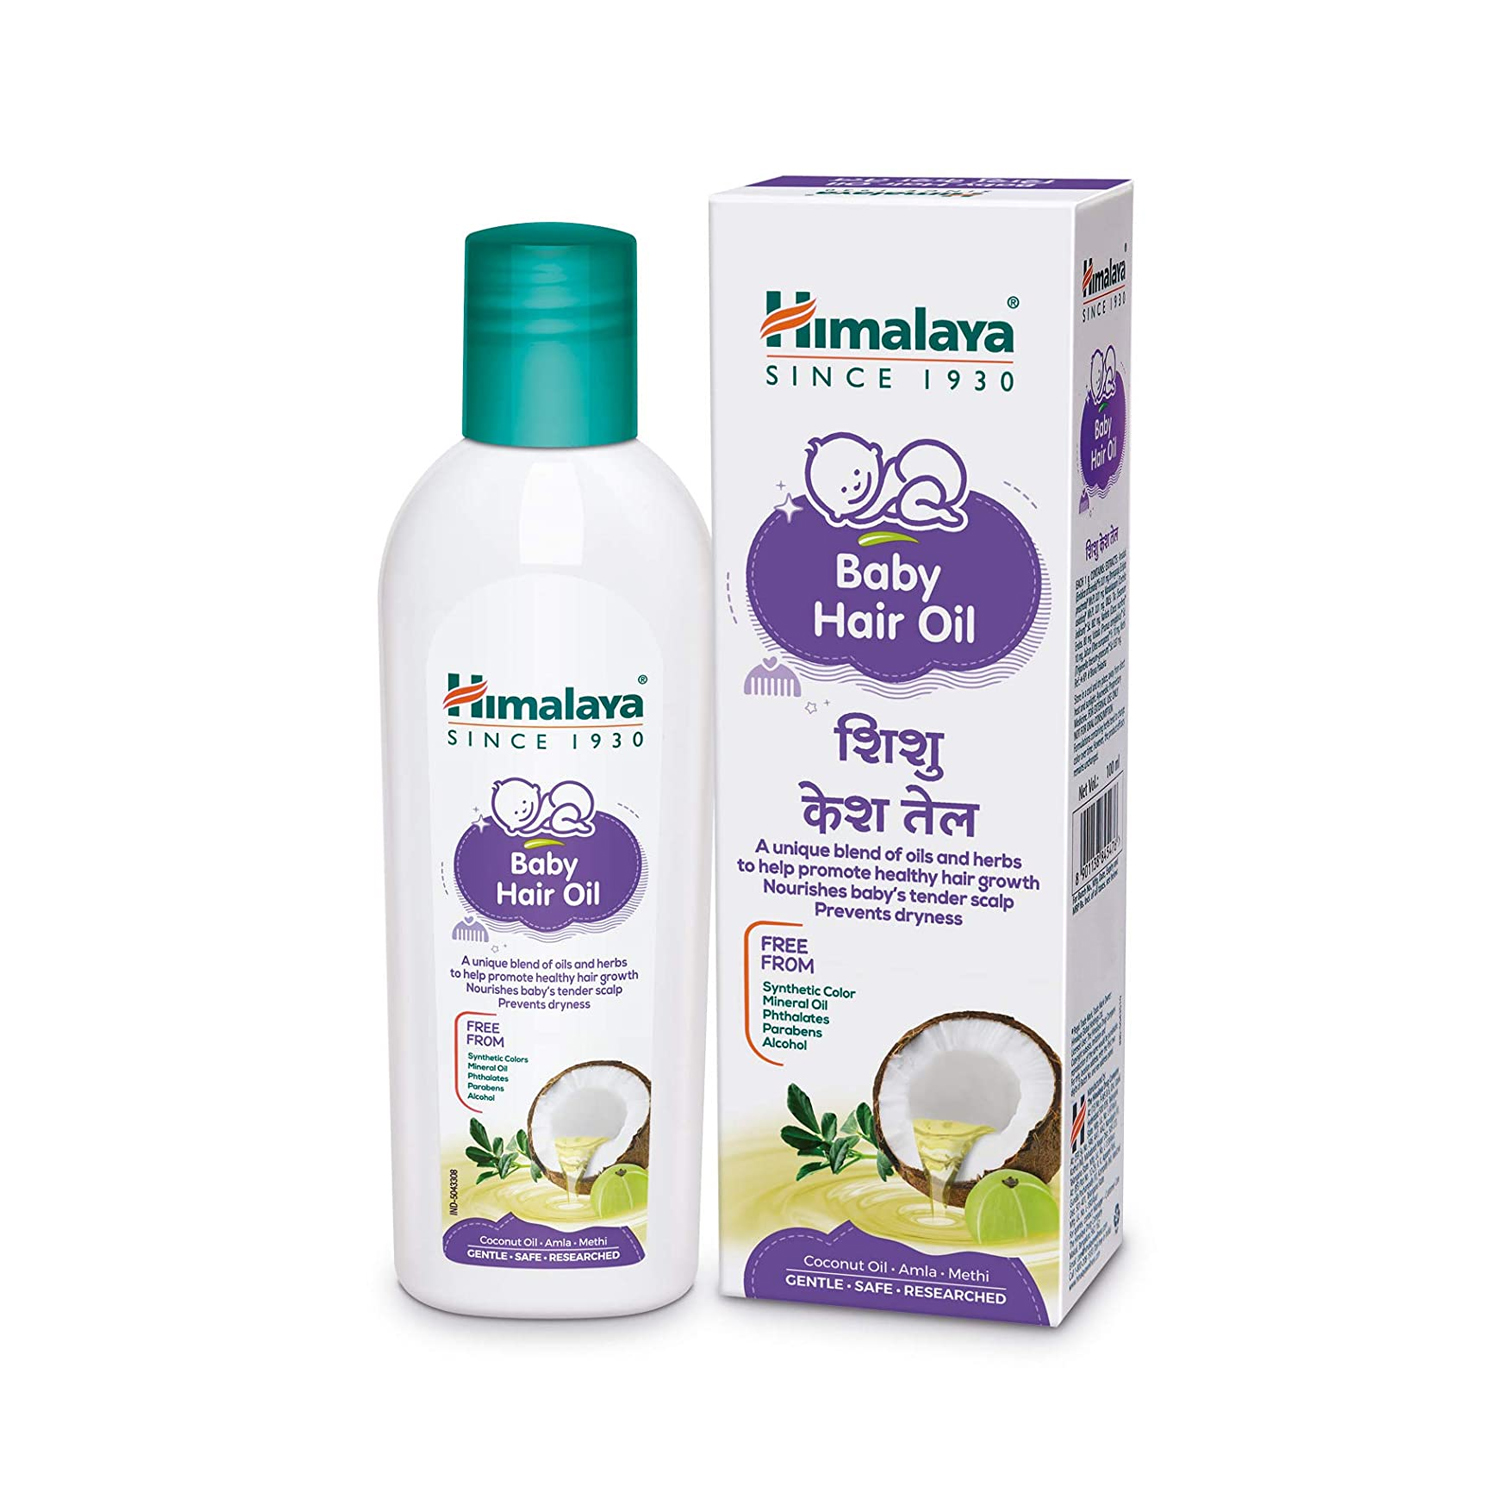 Himalaya Baby Hair Oil is ₹ 104 Lowest Price Online on cureka